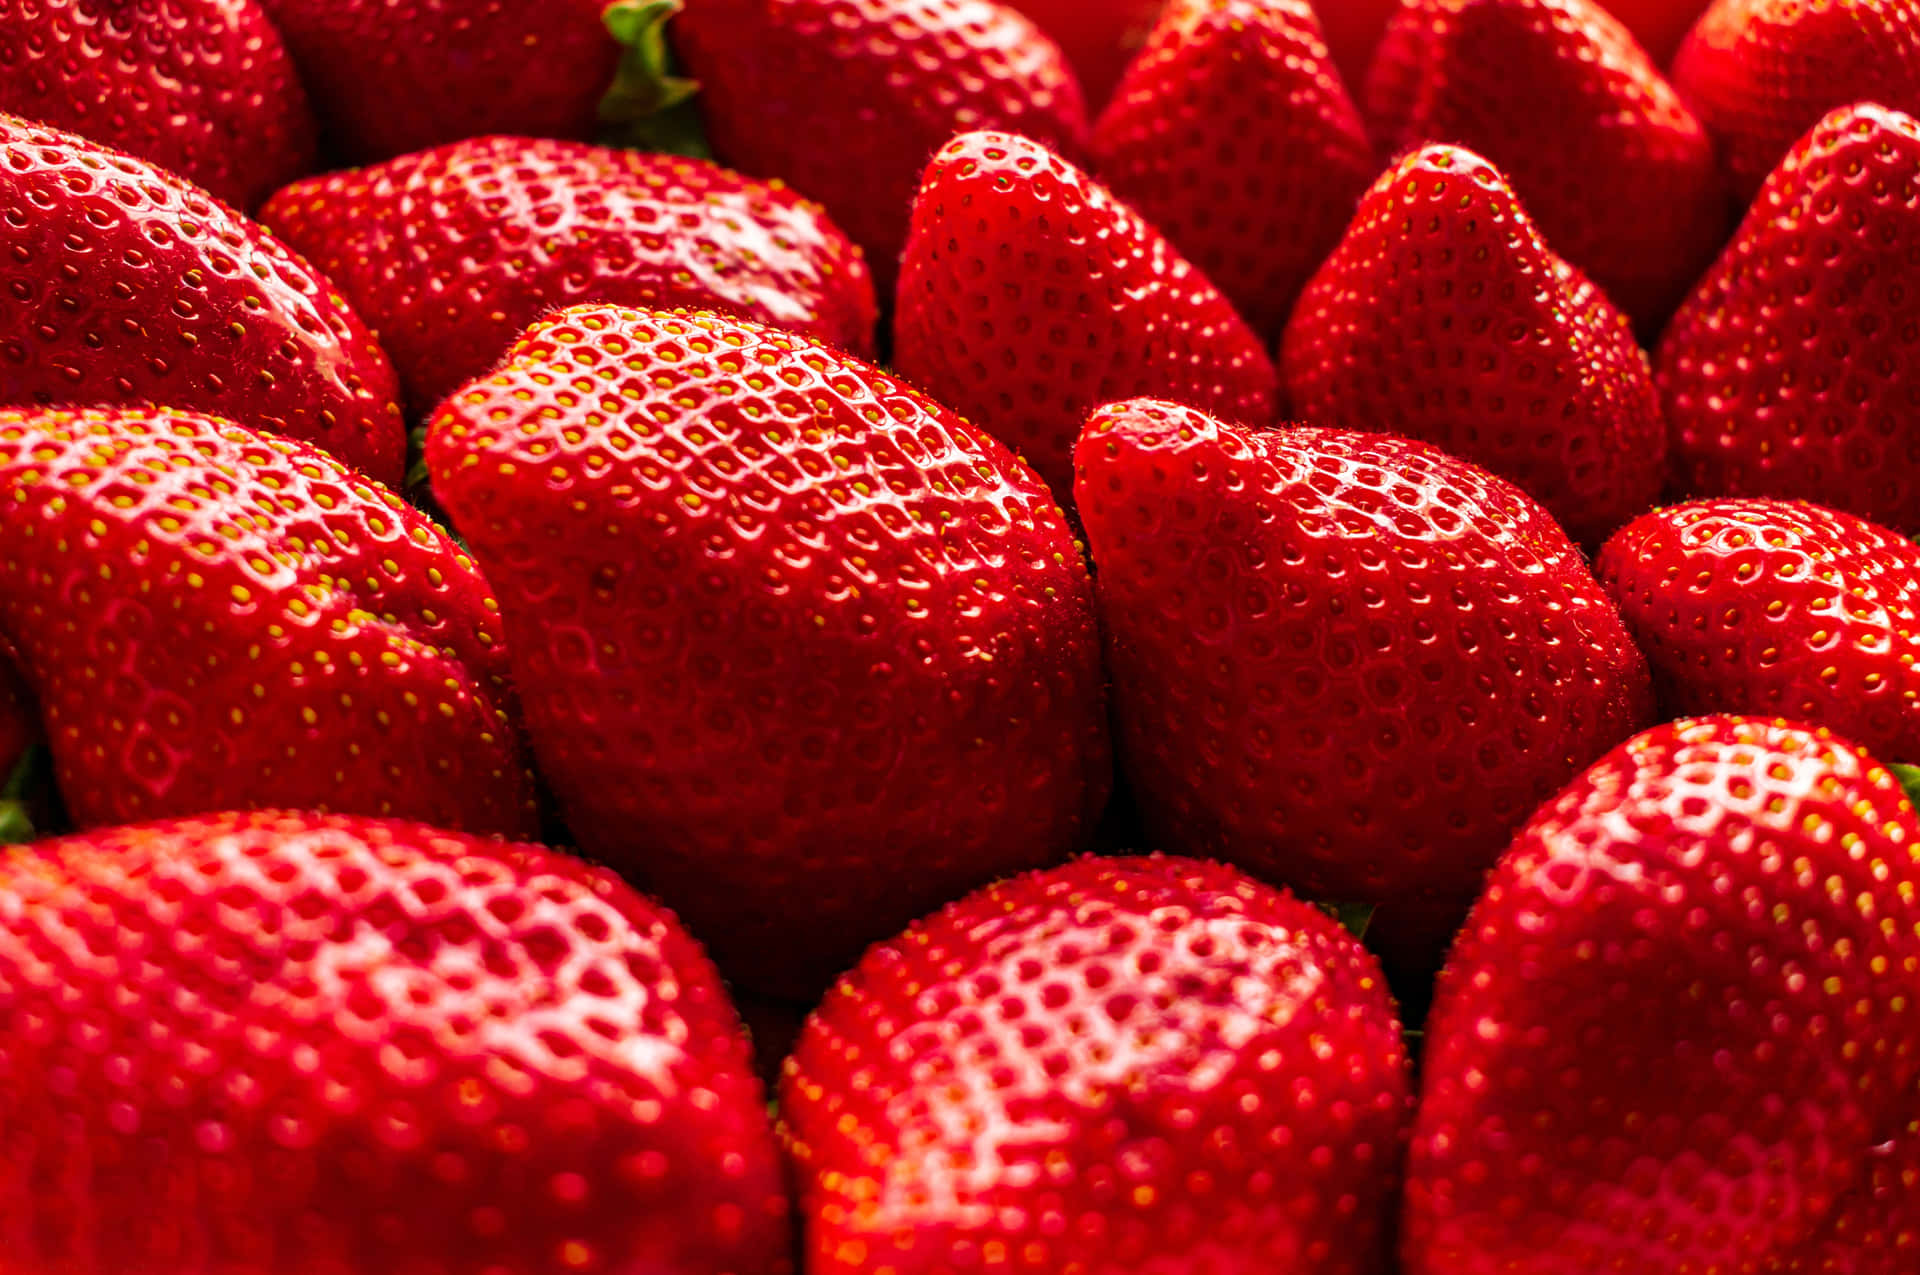 Enjoy a juicy strawberry!